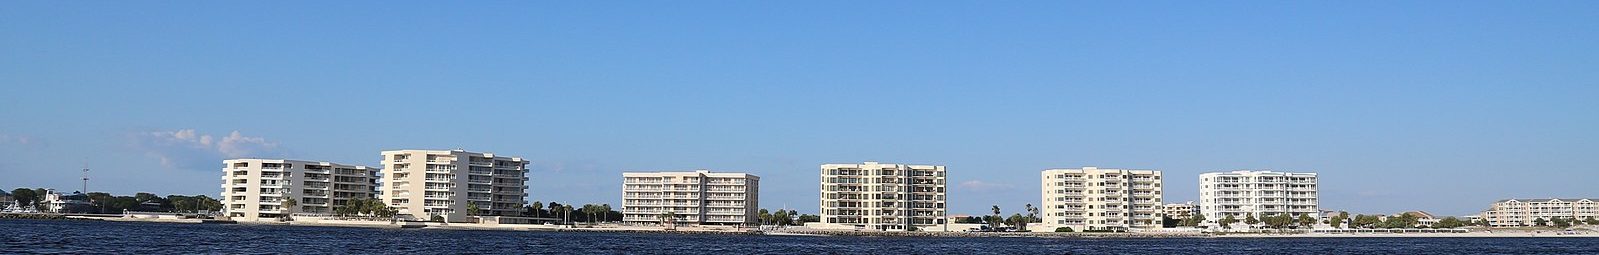 Liberty Moves Moving Company Fort Walton Beach, Florida Location